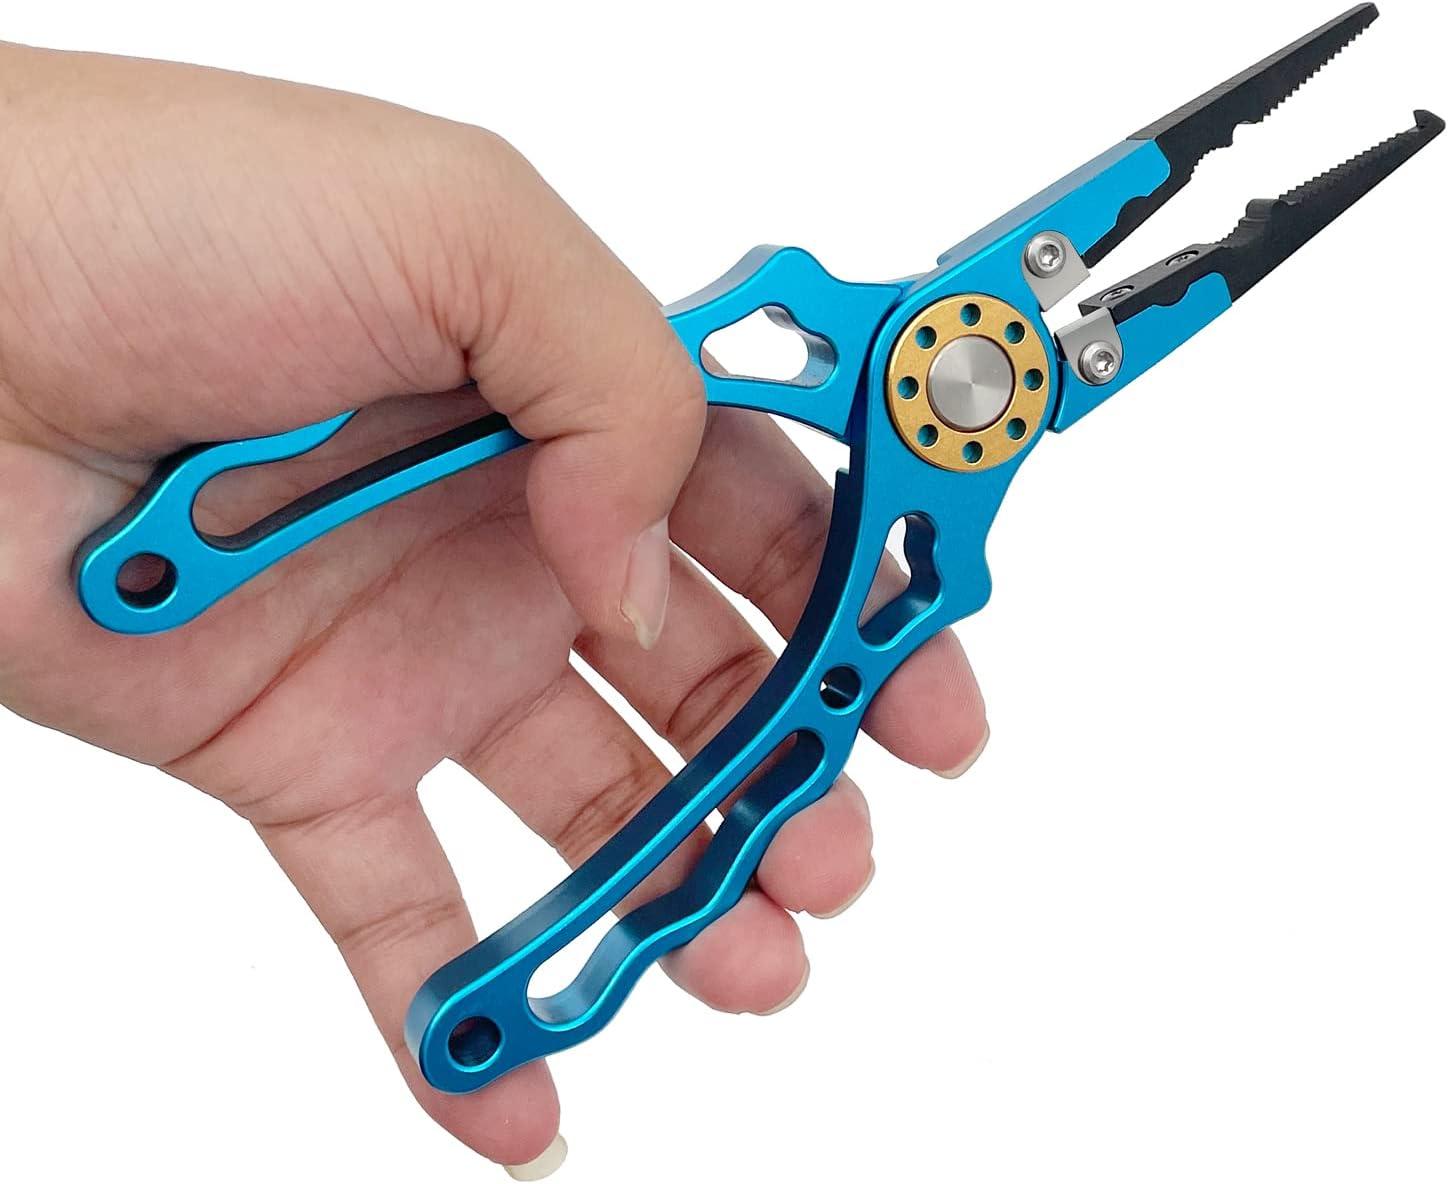 Pince de pêche Line Cutter Grip Multi-fonction Grabber Keeper Fish